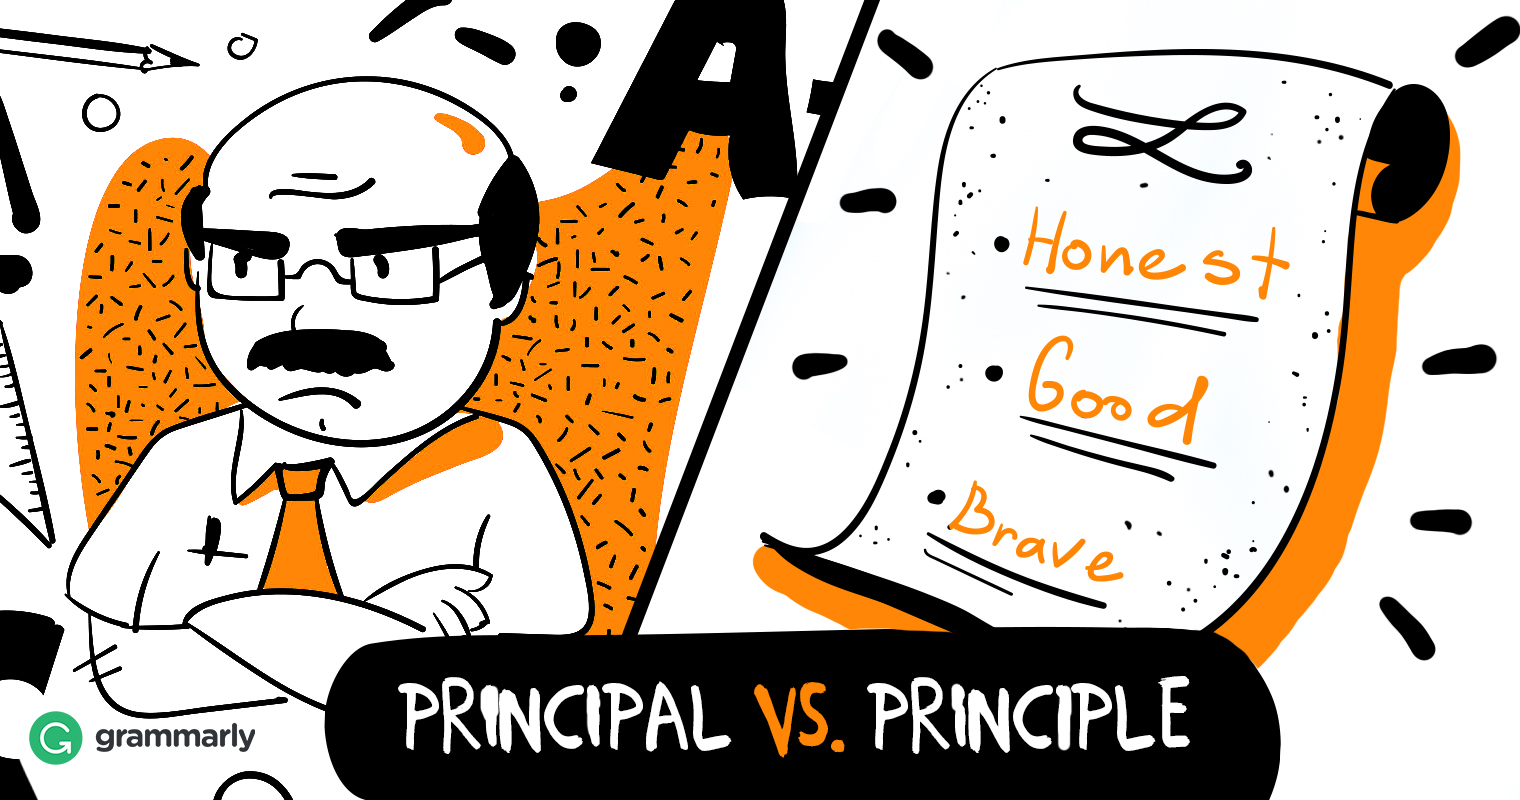 Principal vs principle.